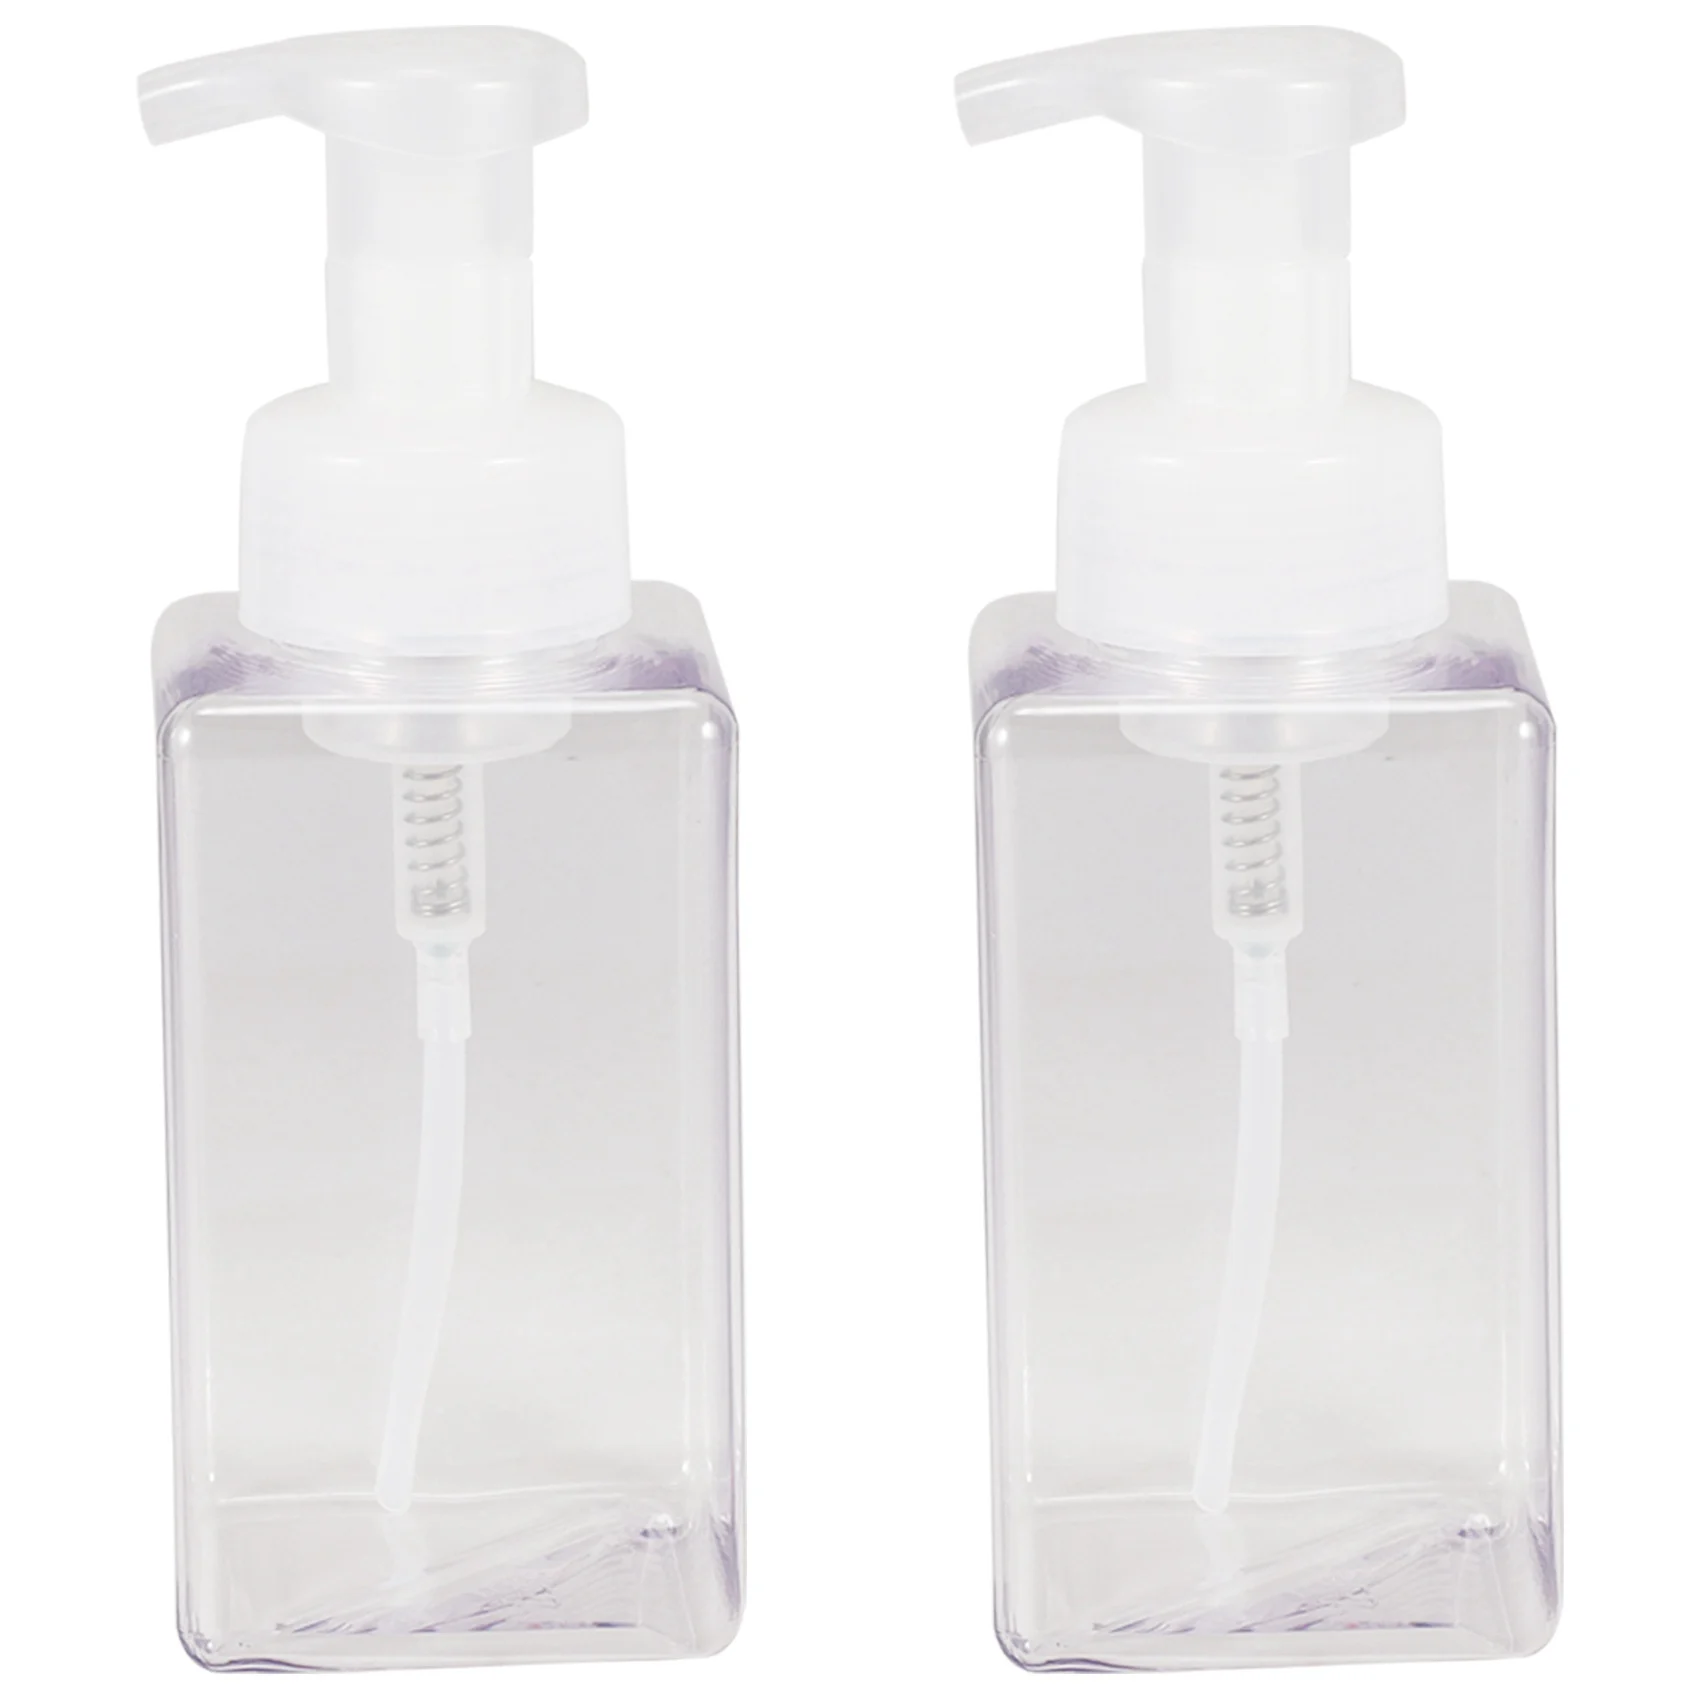 

2 Pack Foaming Soap Dispenser 15Oz Refillable Foam Liquid Hand Soap Empty Plastic Pump Bottle Container - Clear 450Ml